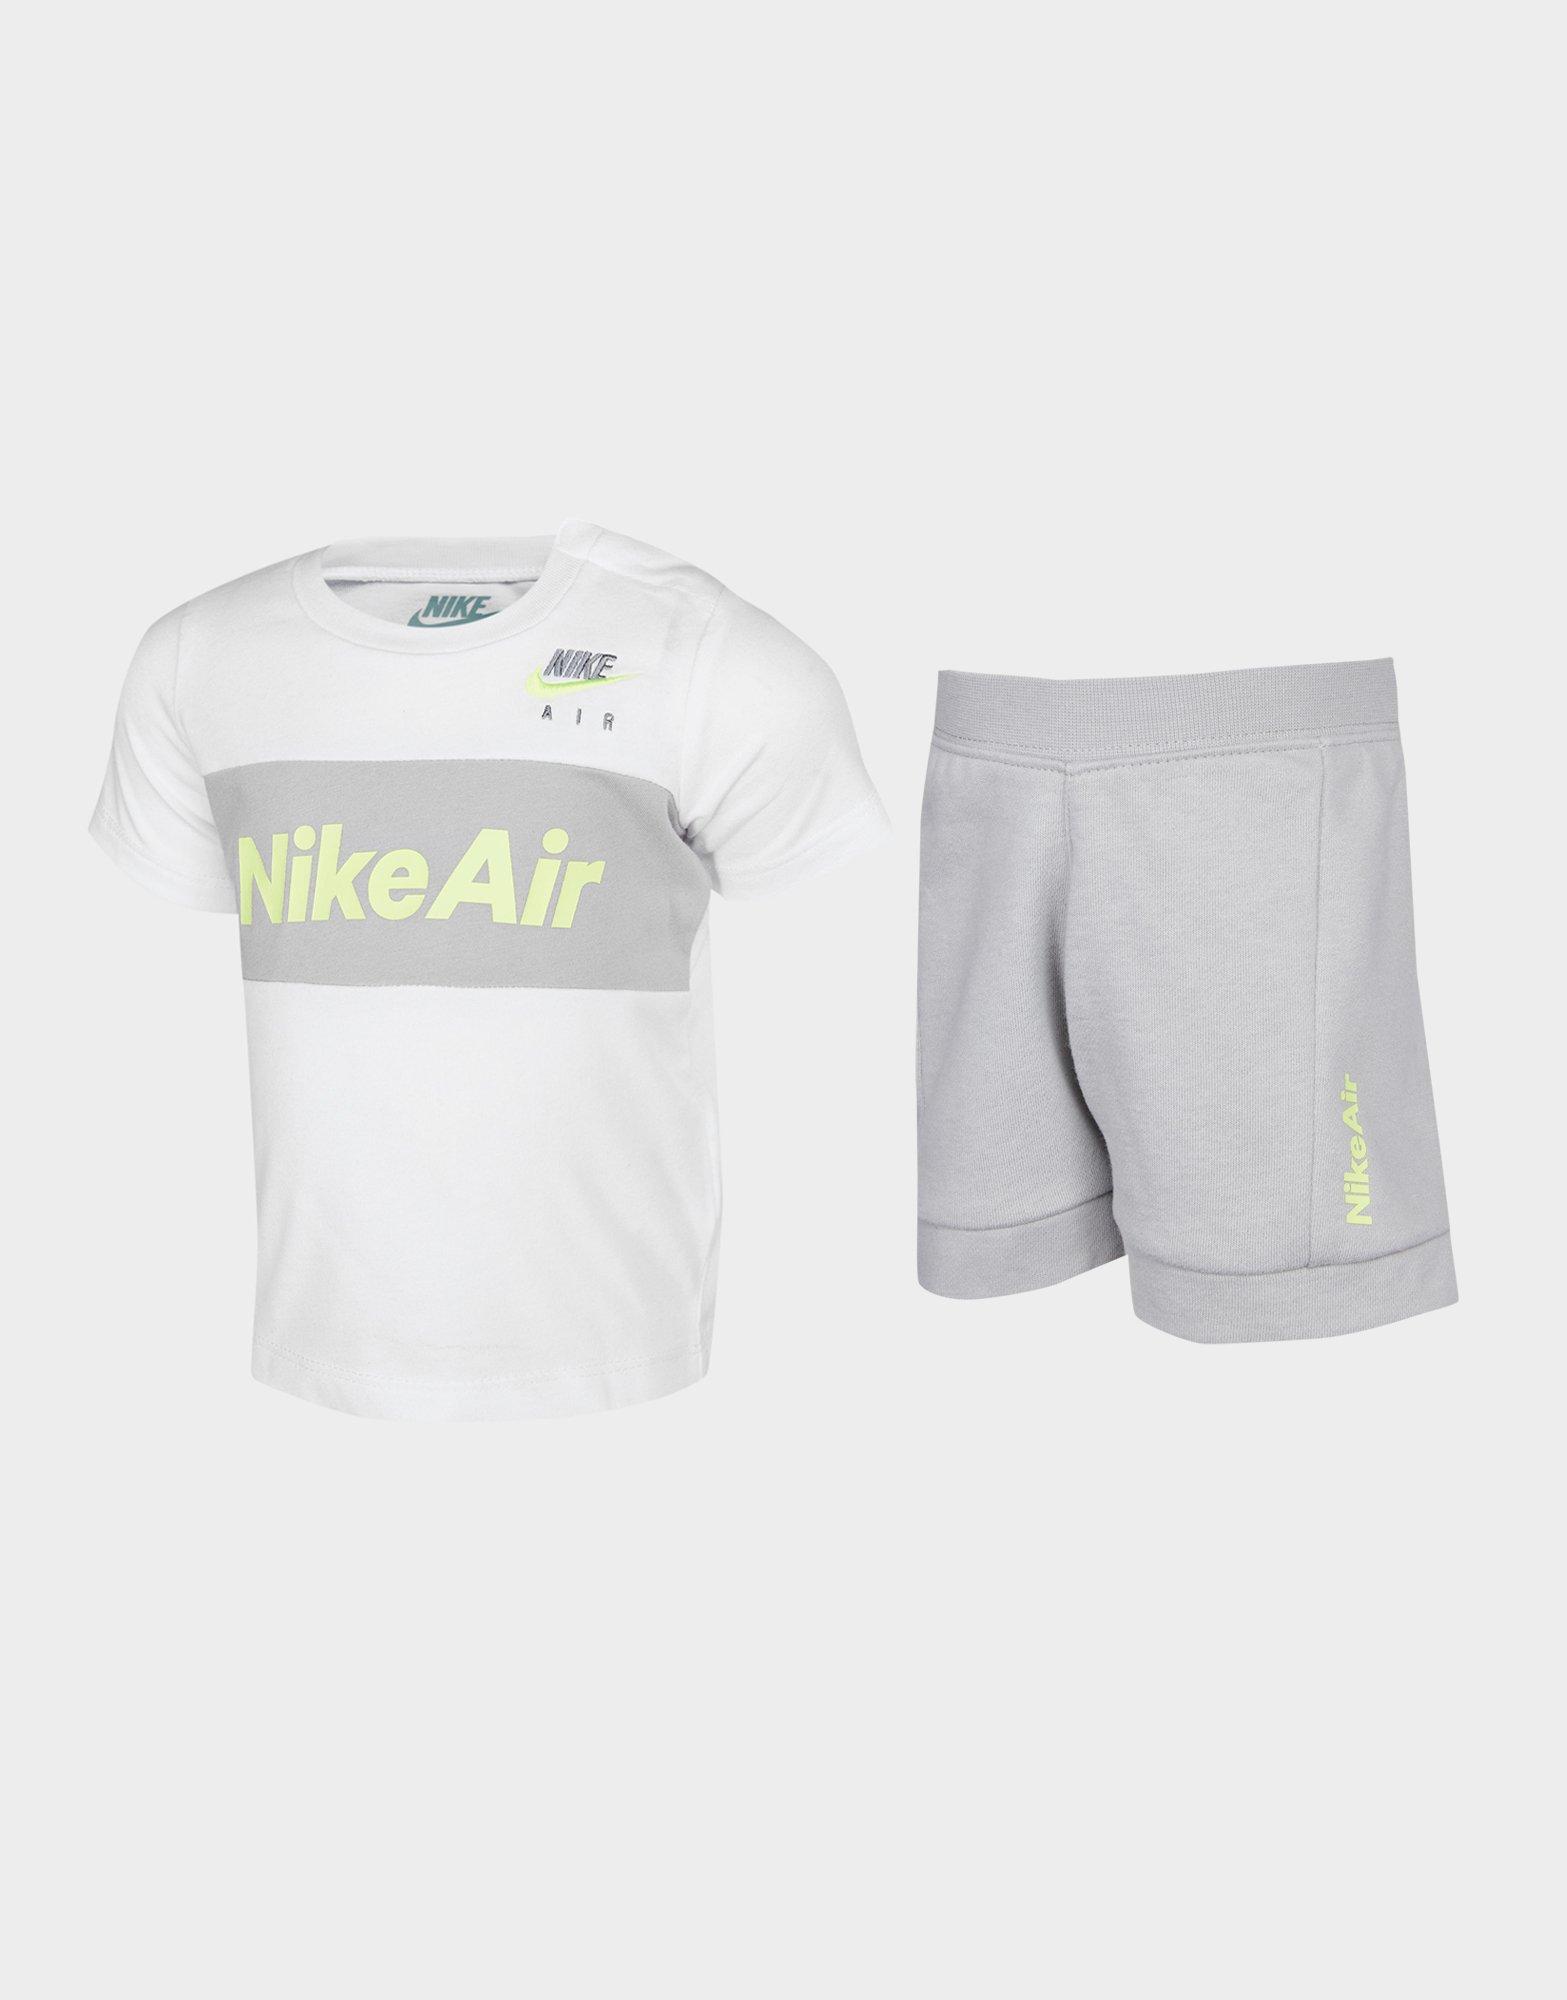 junior nike t shirt and shorts set